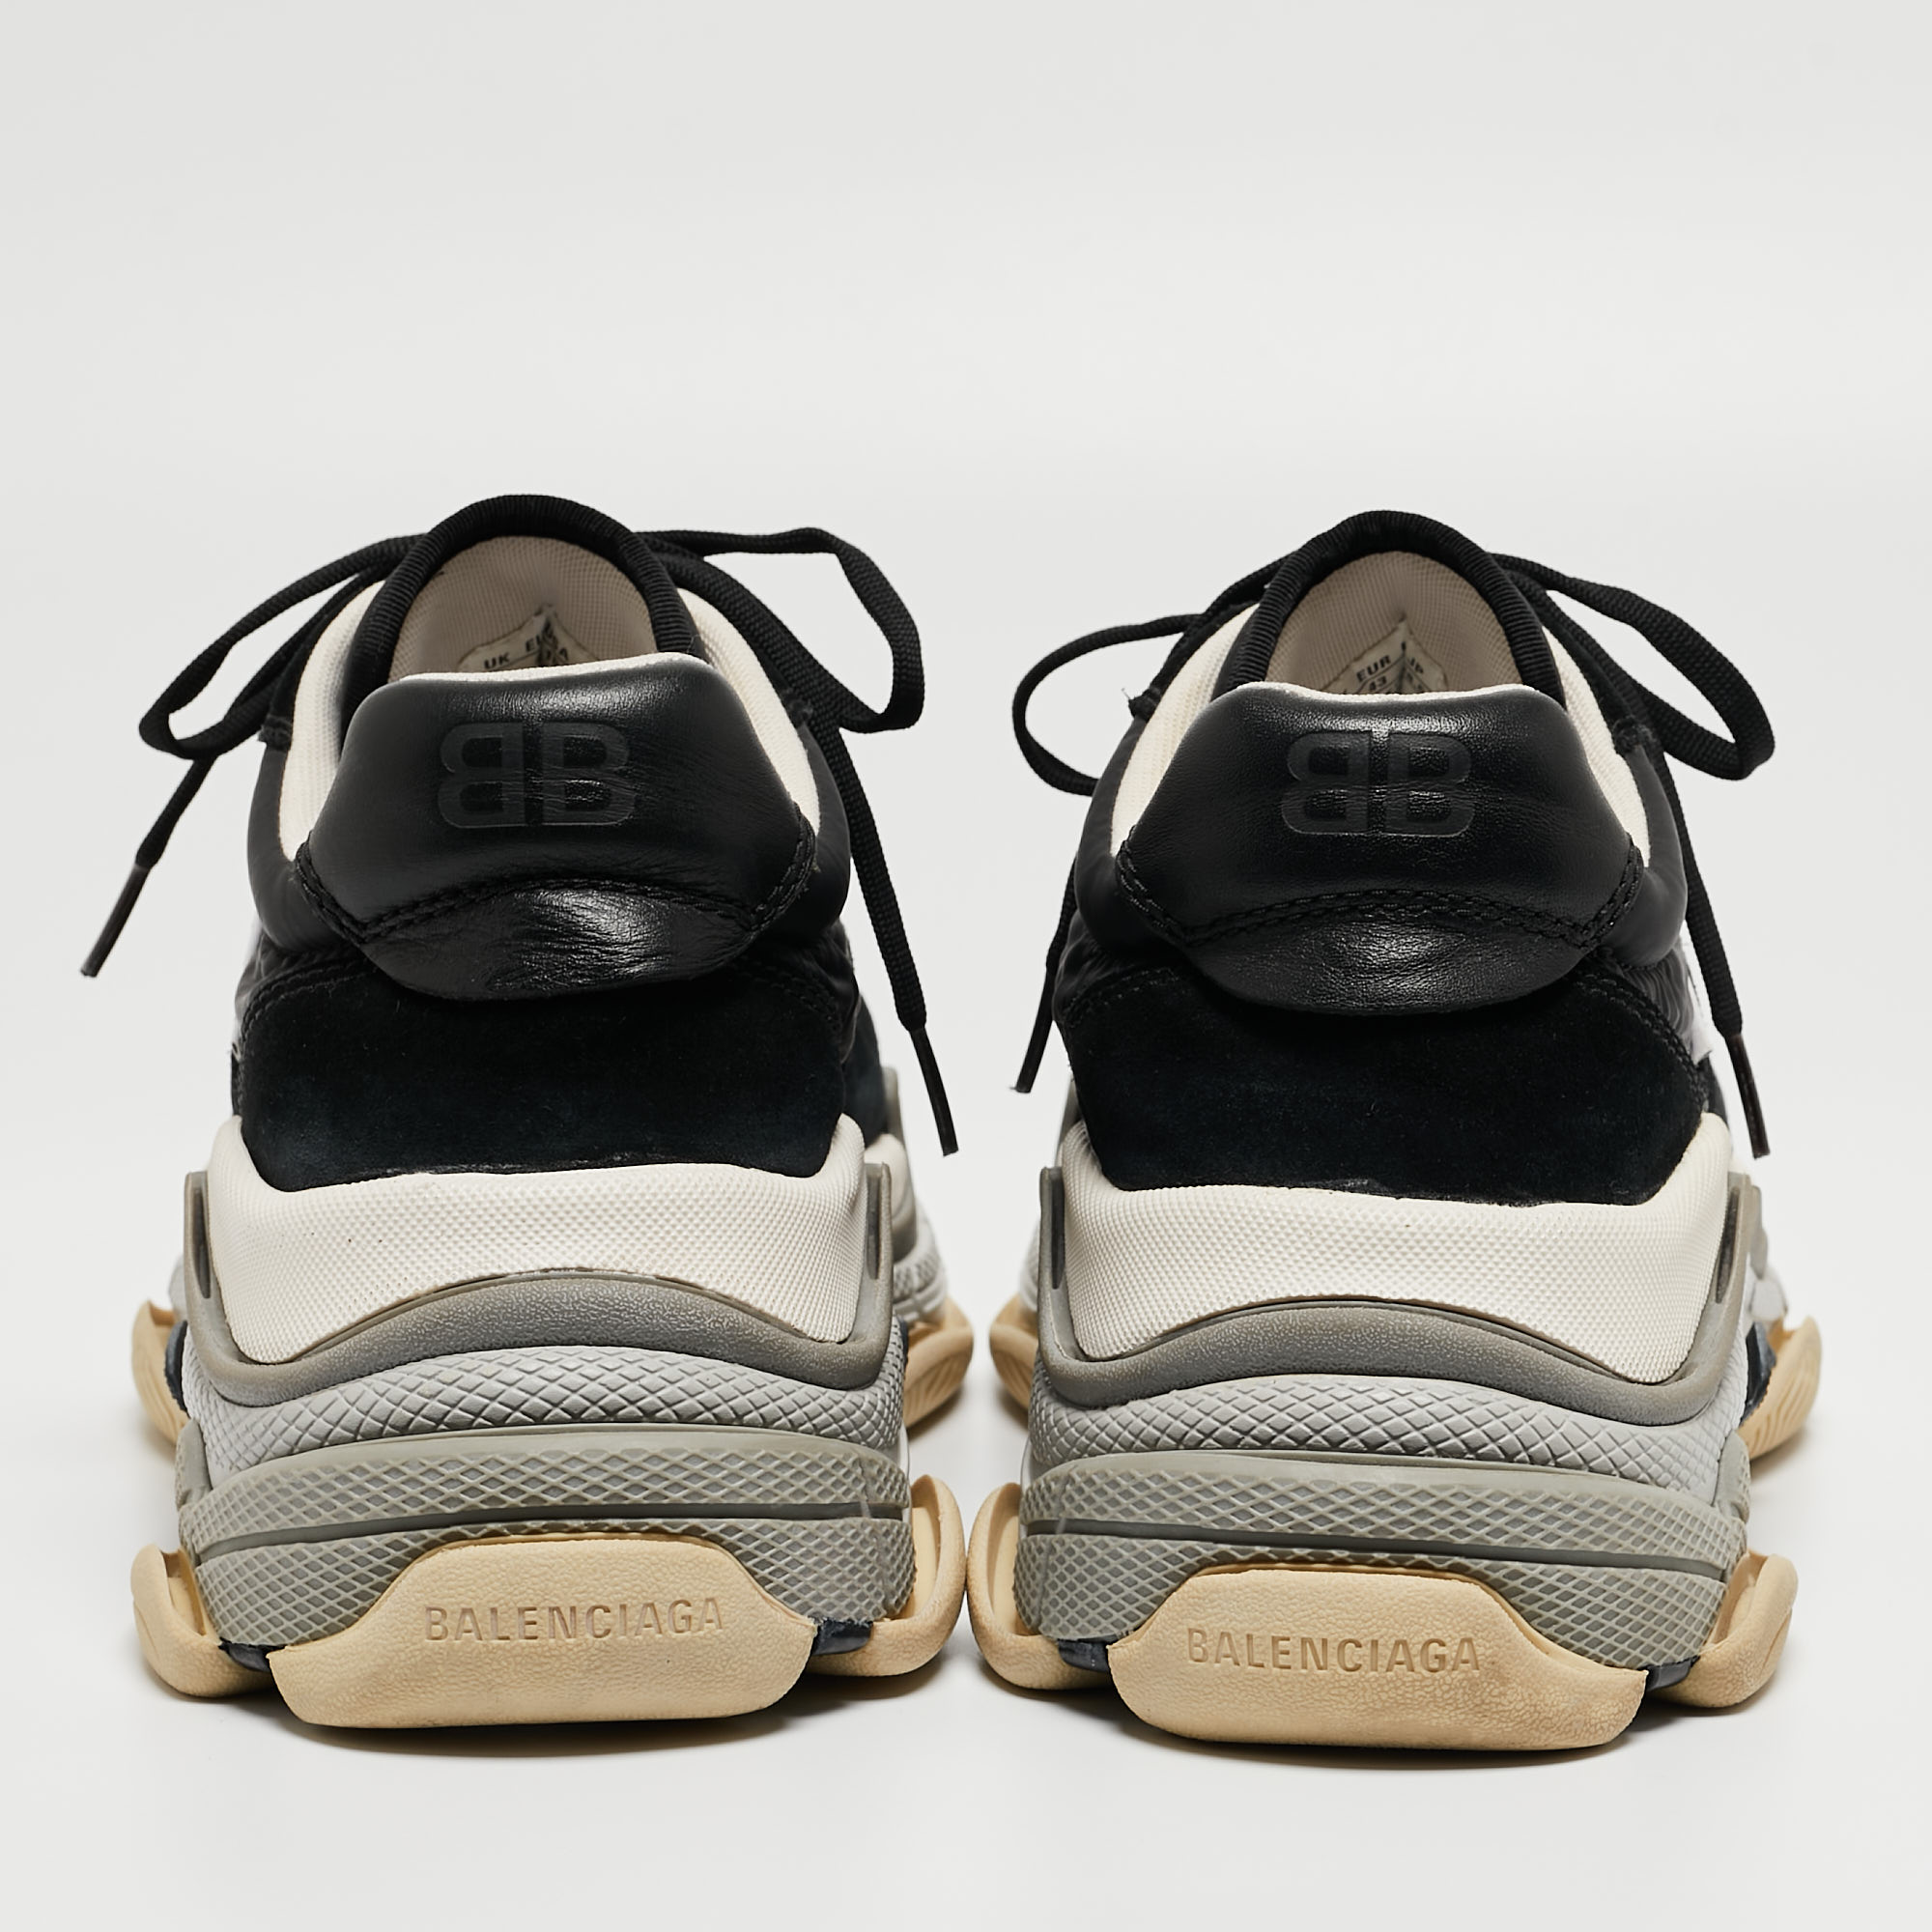 Balenciaga Black/Burgundy Suede And Nylon Triple S Sneakers Size 43